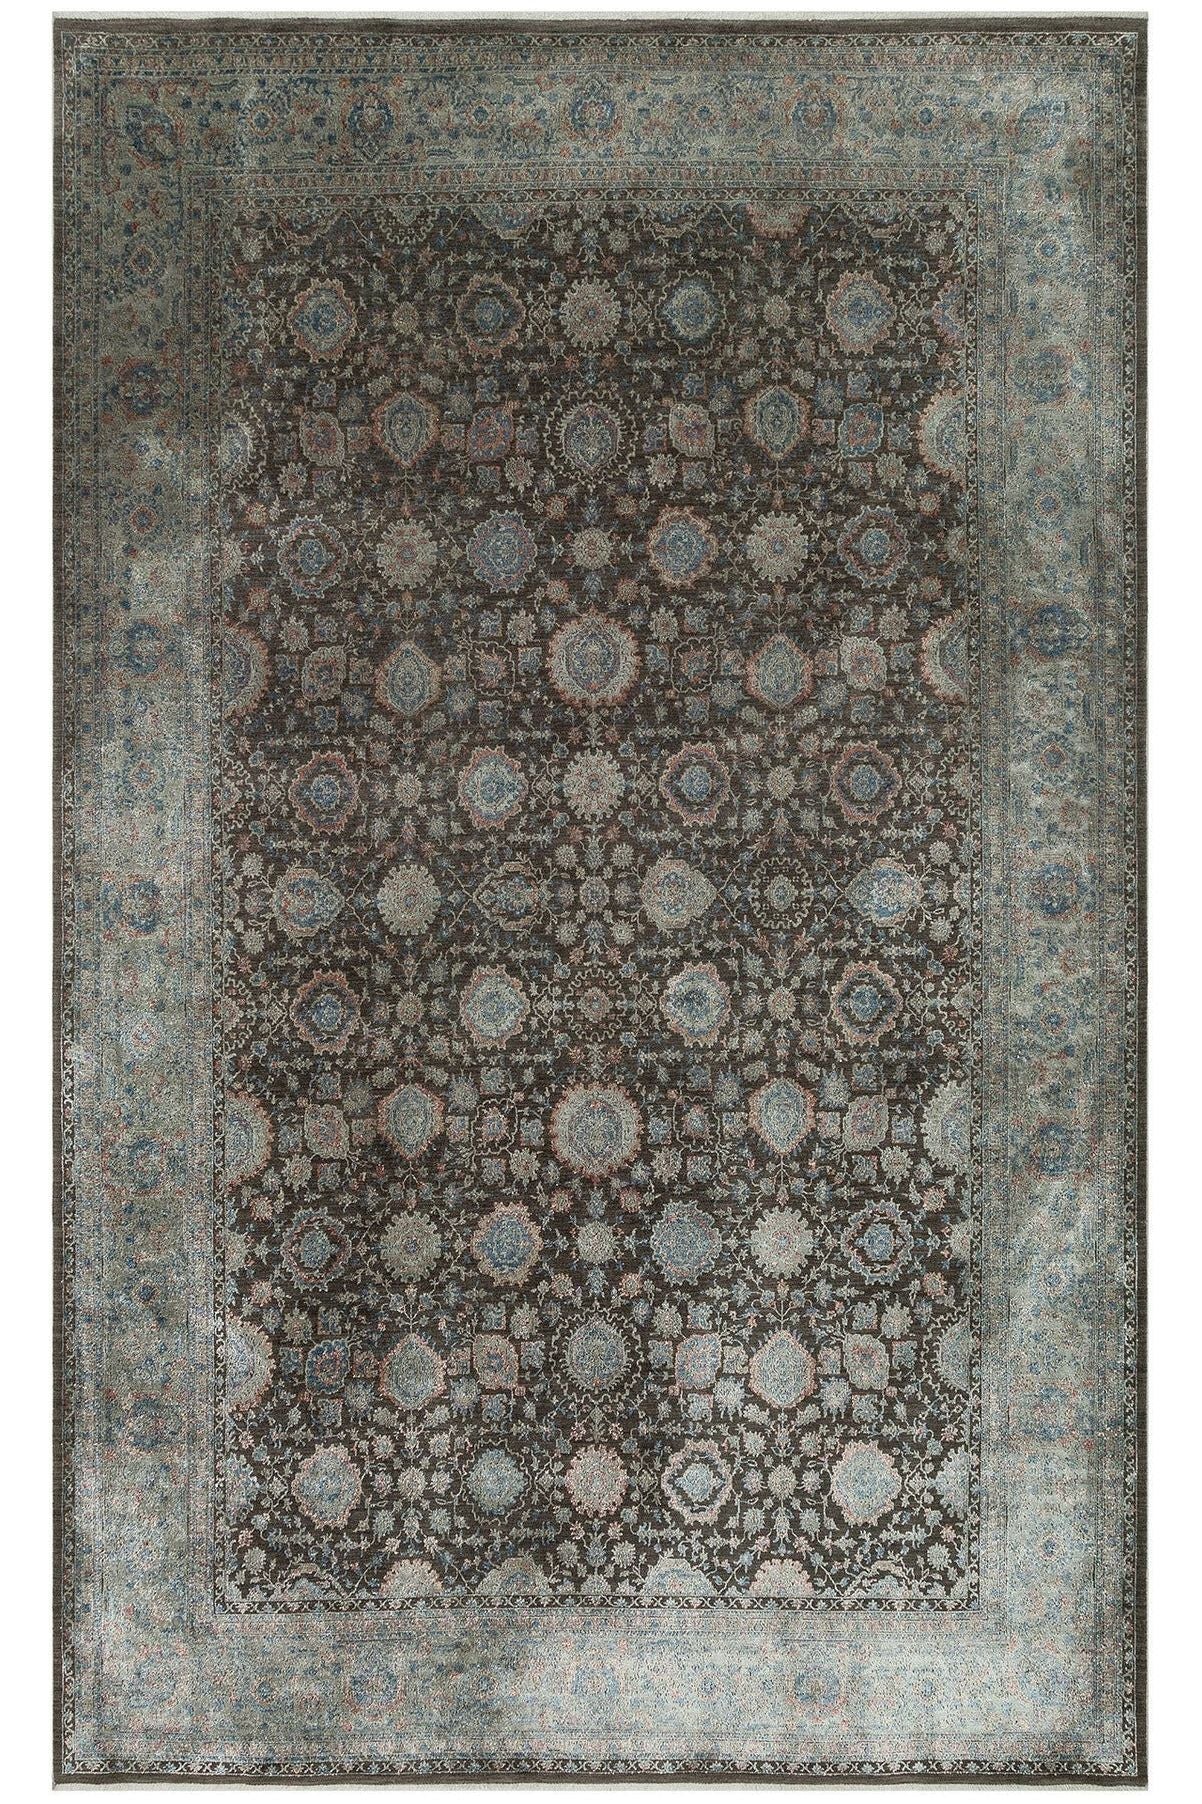 #Turkish_Carpets_Rugs# #Modern_Carpets# #Abrash_Carpets#Lhr 01 Petrol